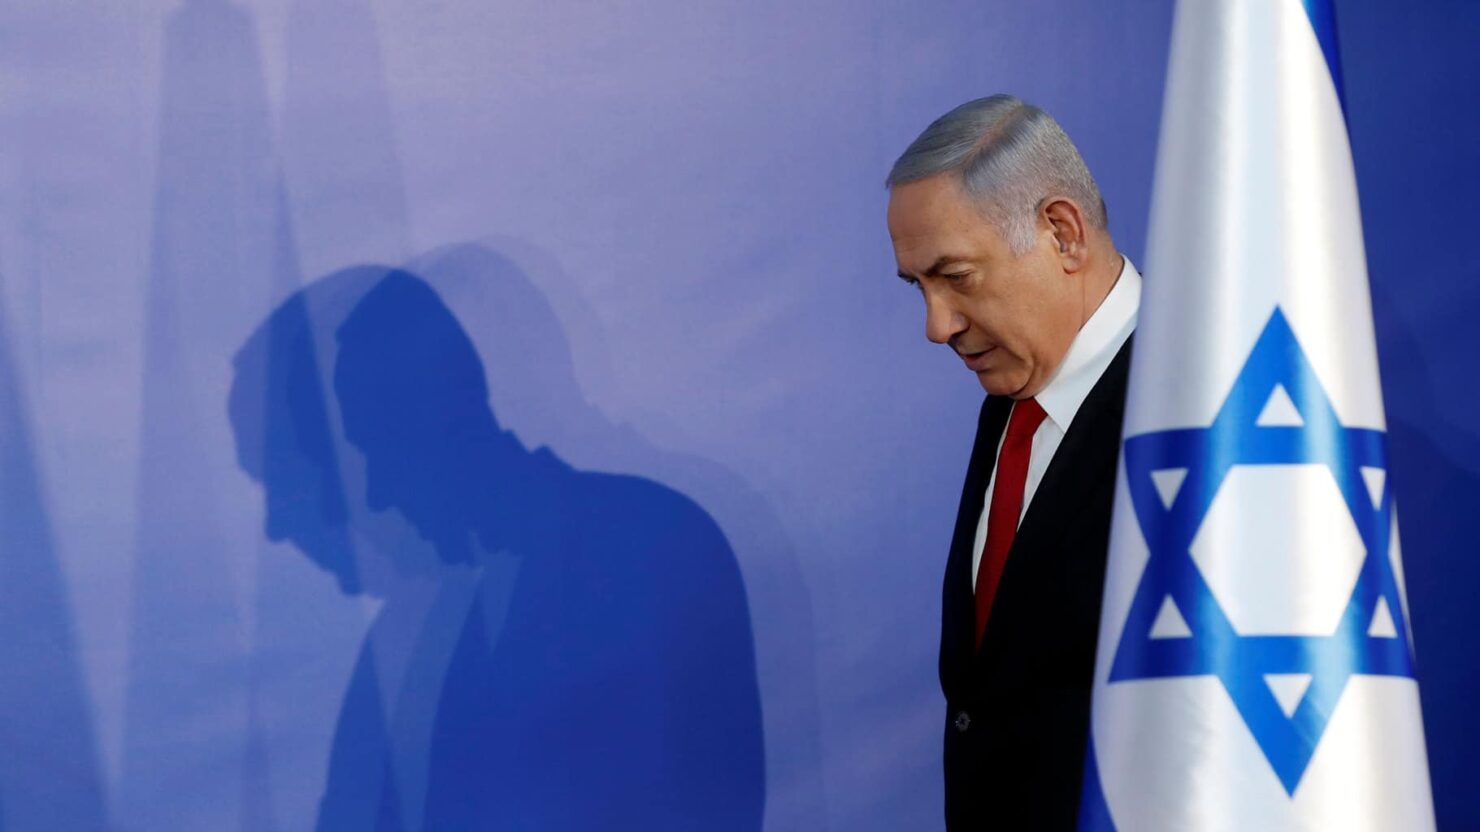 takian.ir israel hackers leak thousands of personal details as netanyahus facebook account targeted